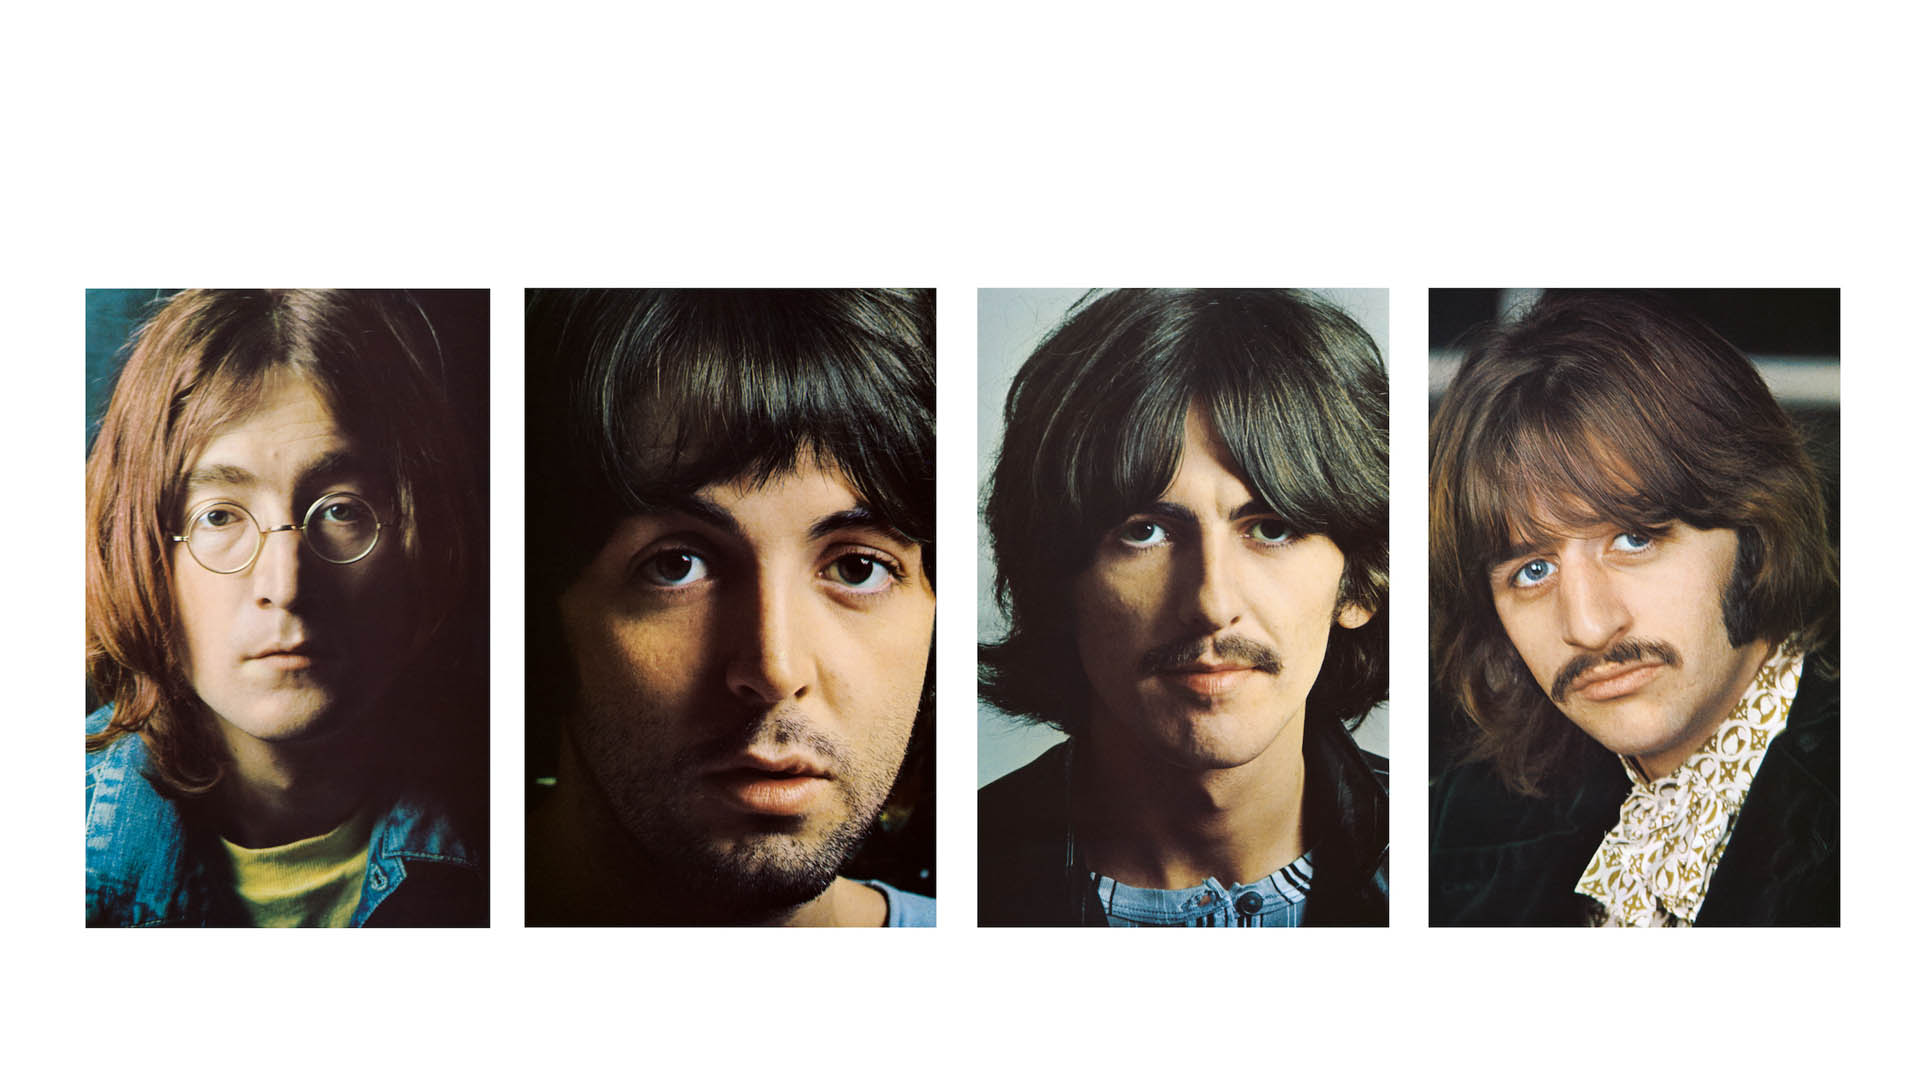 The Beatles John Lennon Paul McCartney George Harrison Ringo Starr Men Celebrity Musician Rock Music 1920x1080